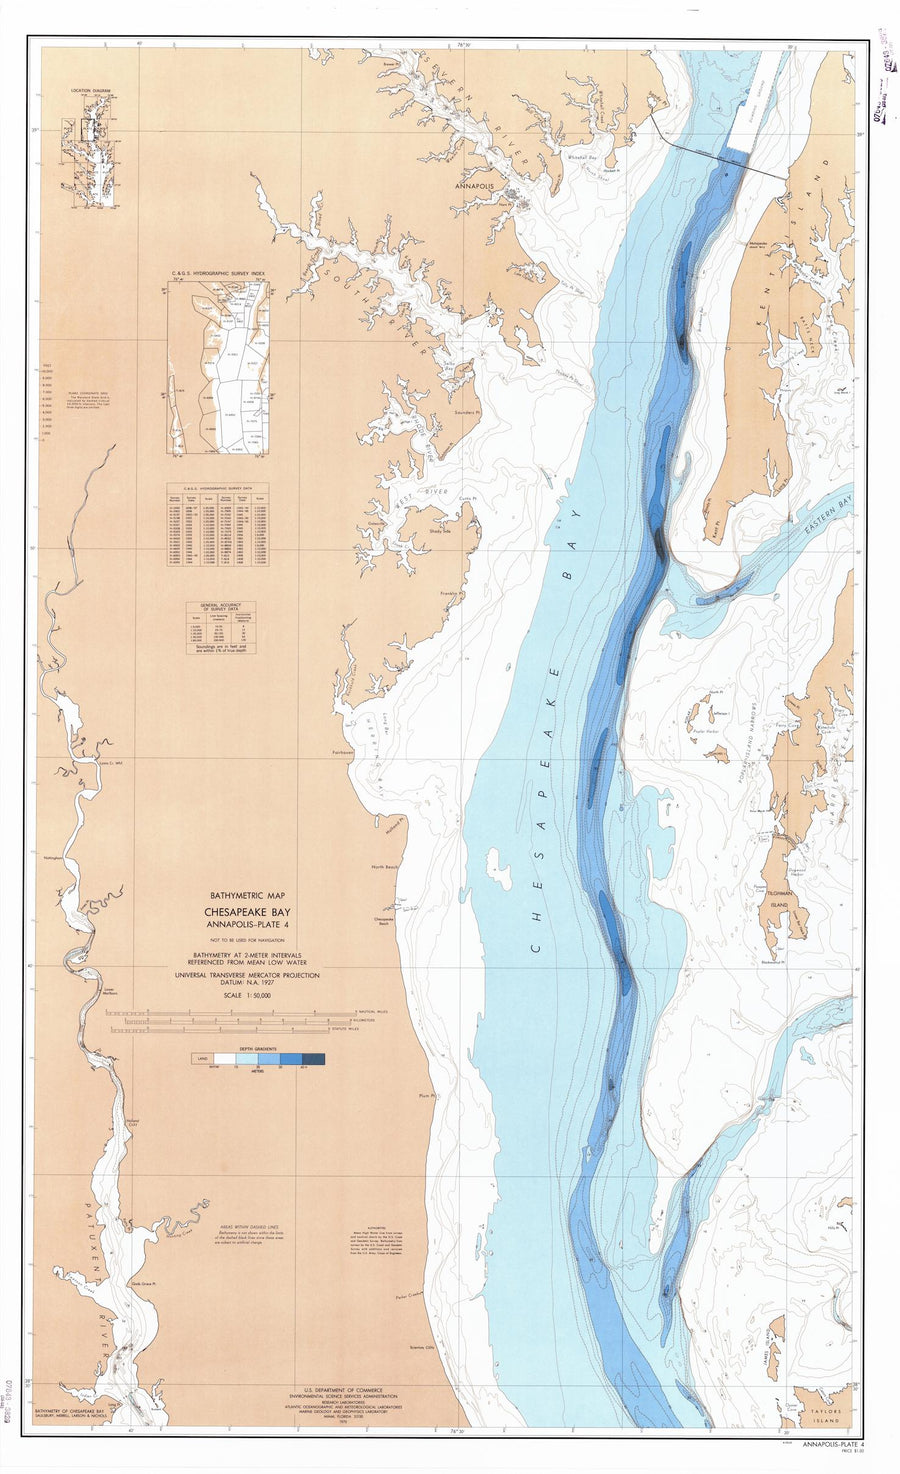 Chesapeake Bay Annapolis Bathymetric Map - PLATE 4